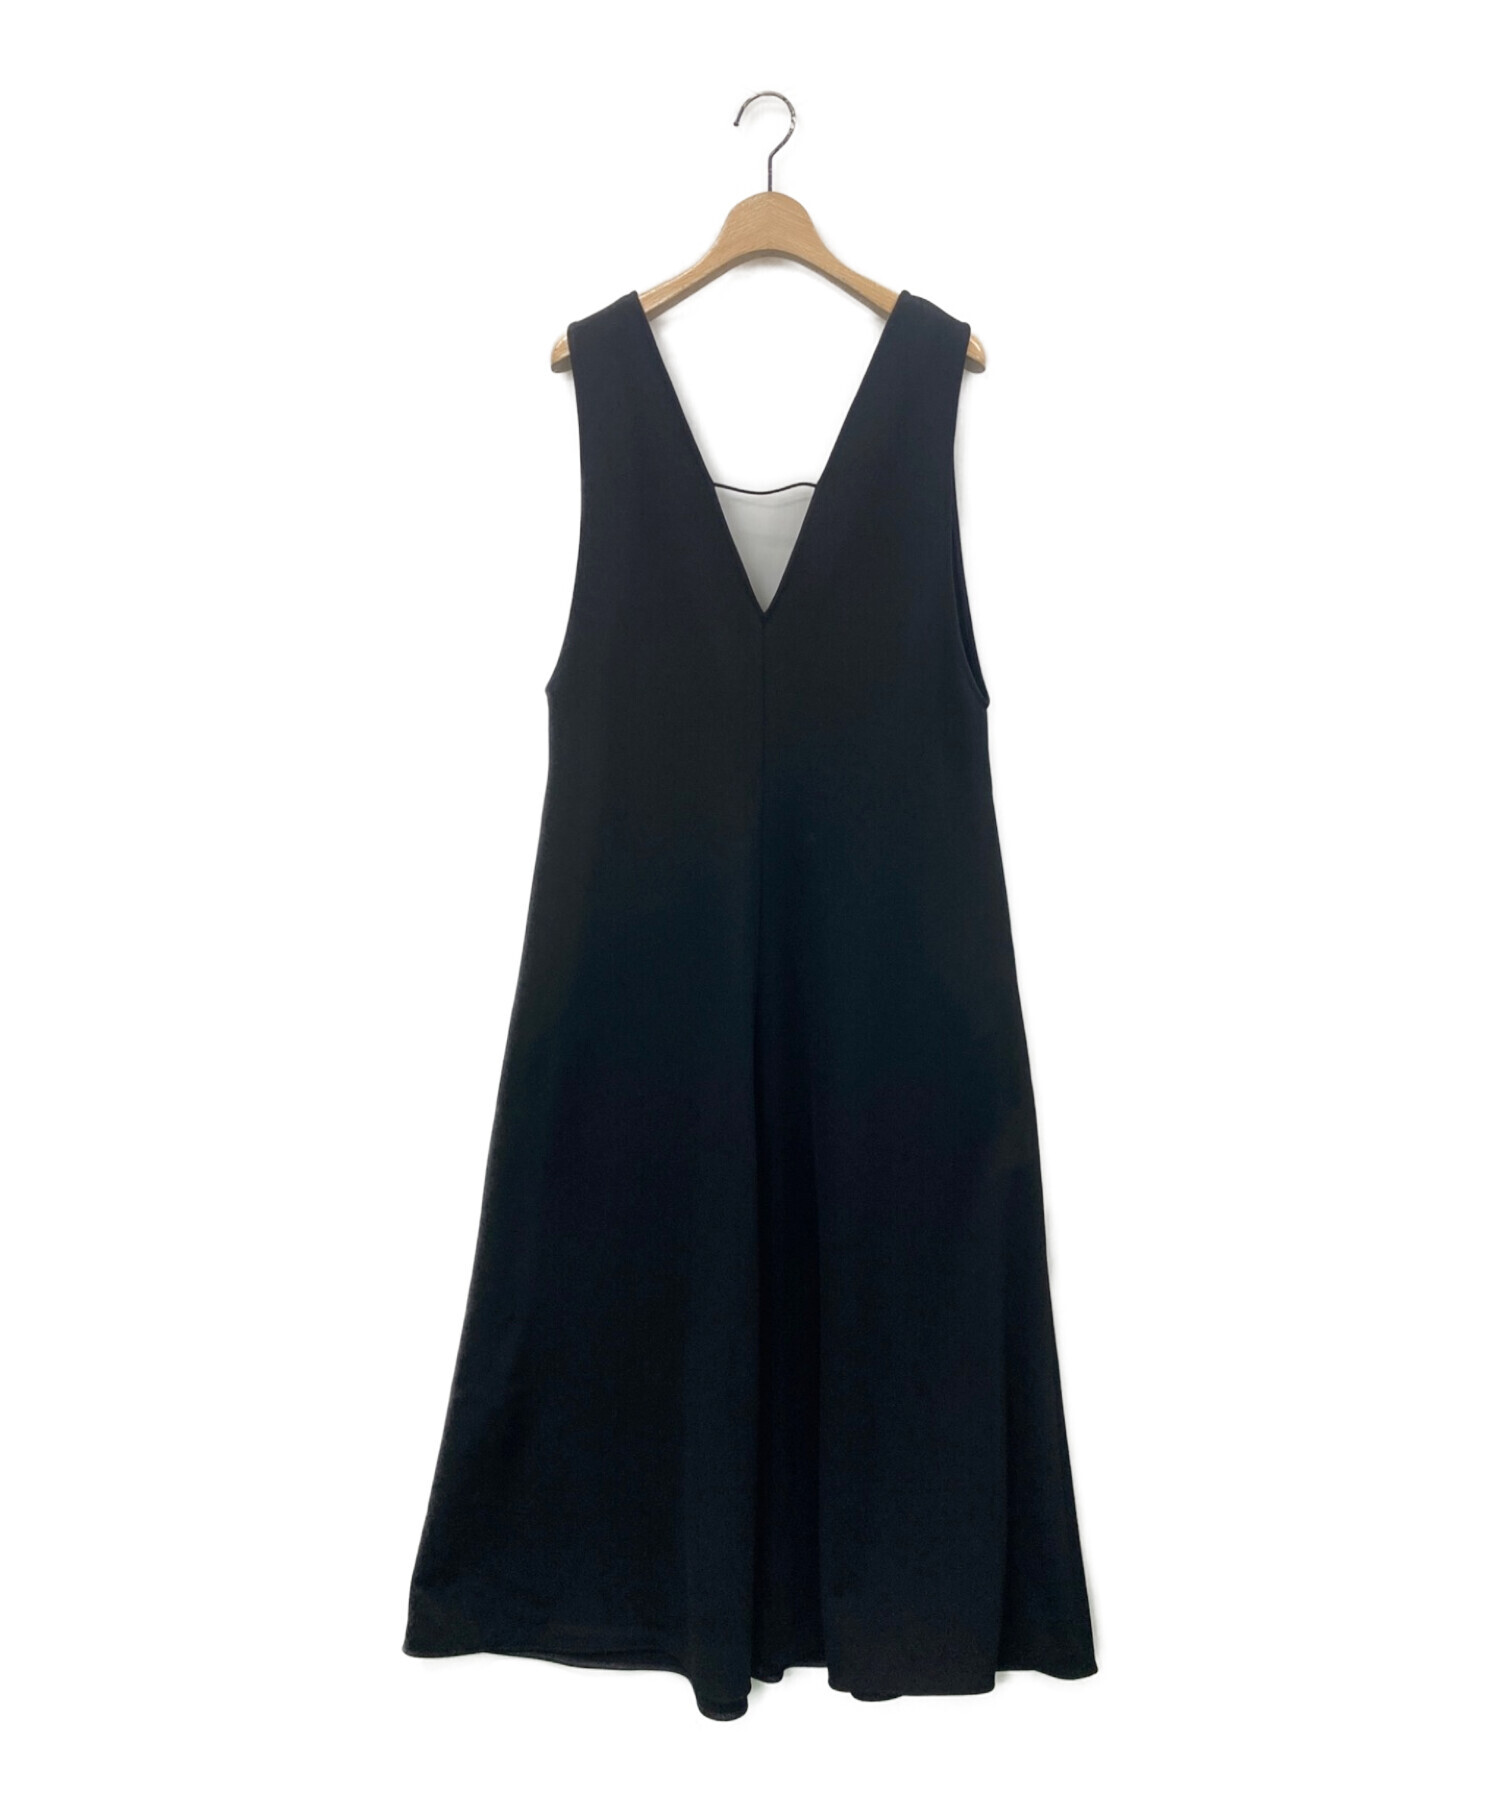 GALLARDA GALANTE (ガリャルダガランテ) フレアージャンパースカート ブラック サイズ:F